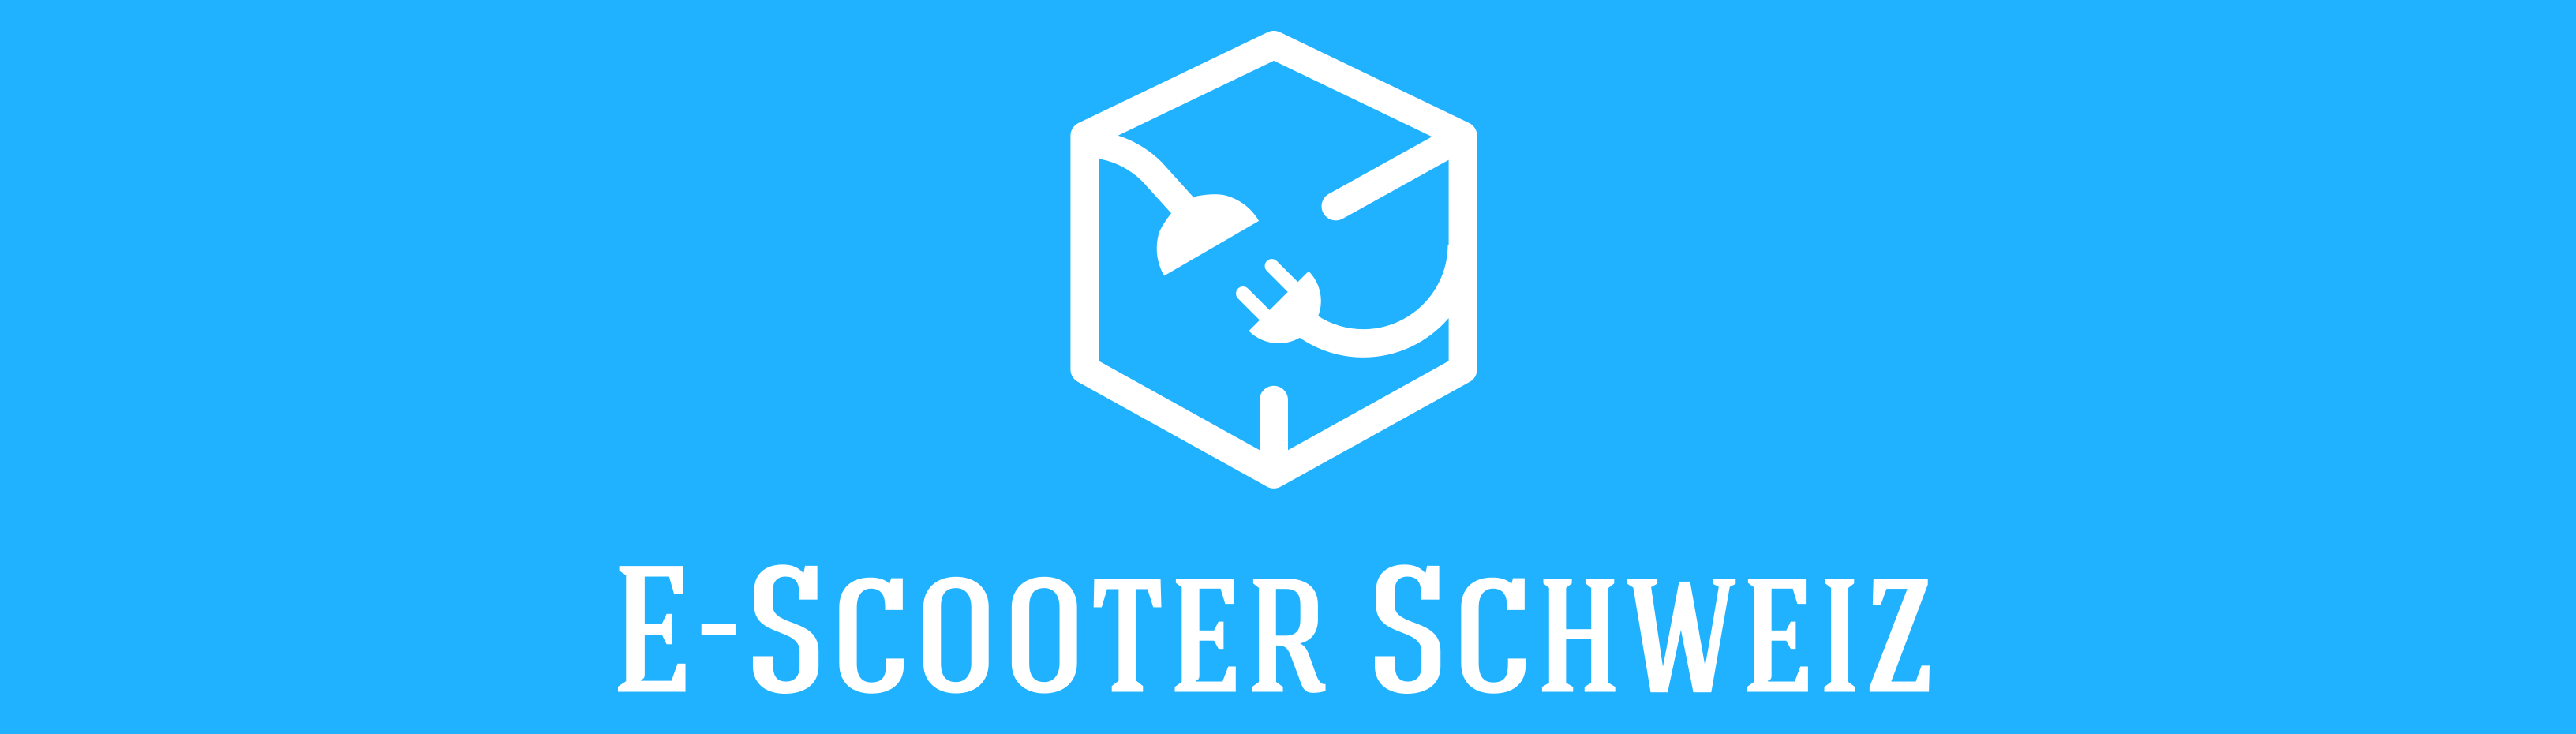 www.escooter-schweiz.ch